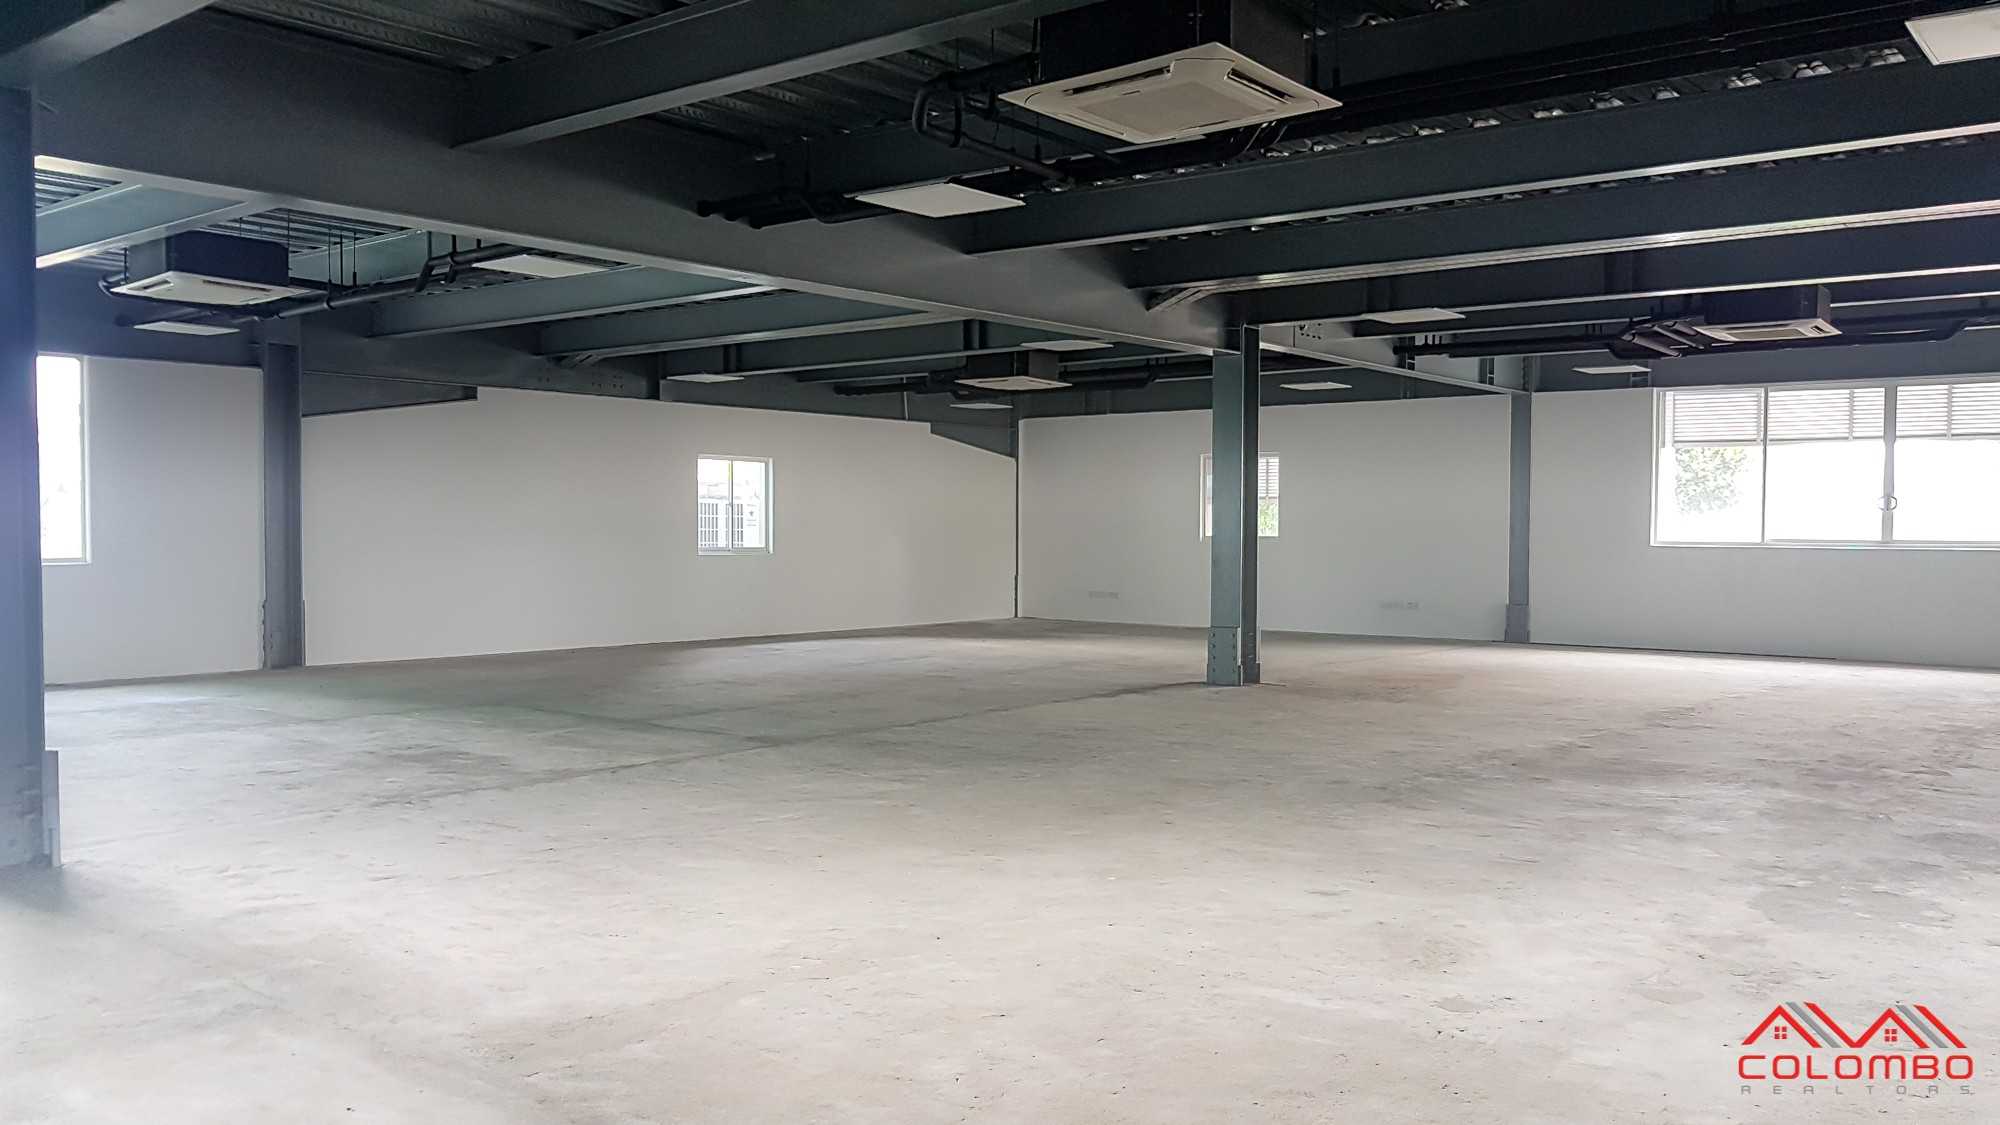 sqft one floor modern office commercial space rent lease bambalapitiya sri lanka sl colombo realtors lk